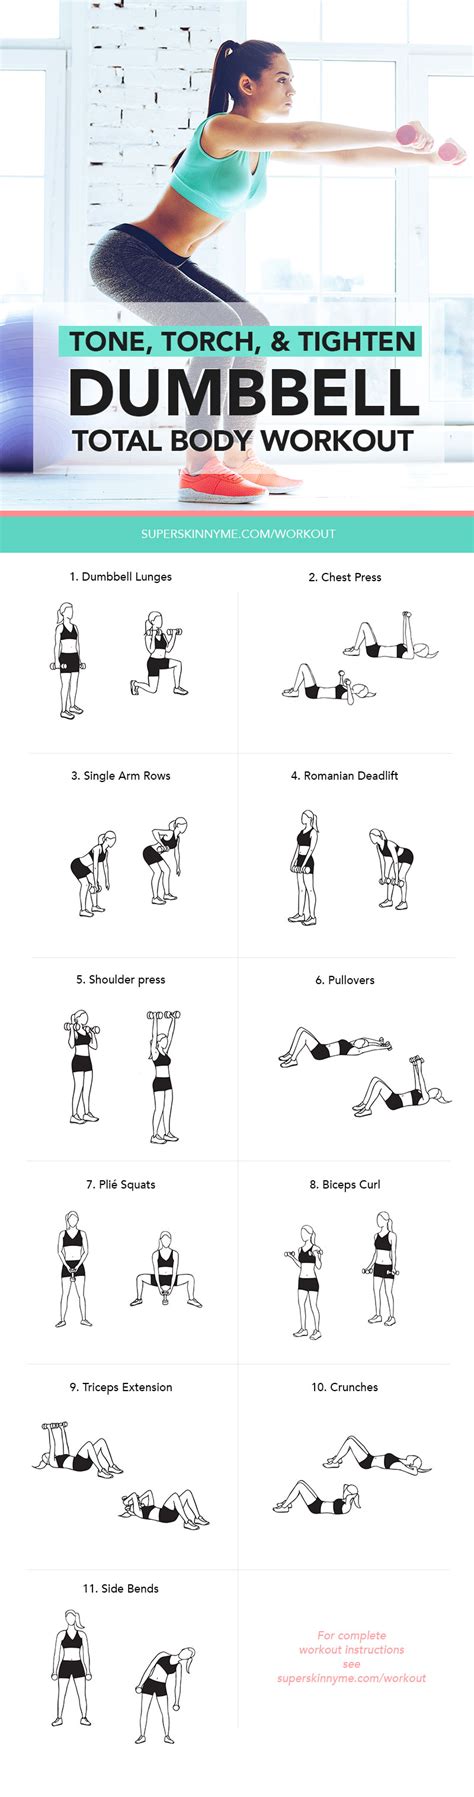 Dumbbell Upper Body Workout Plan